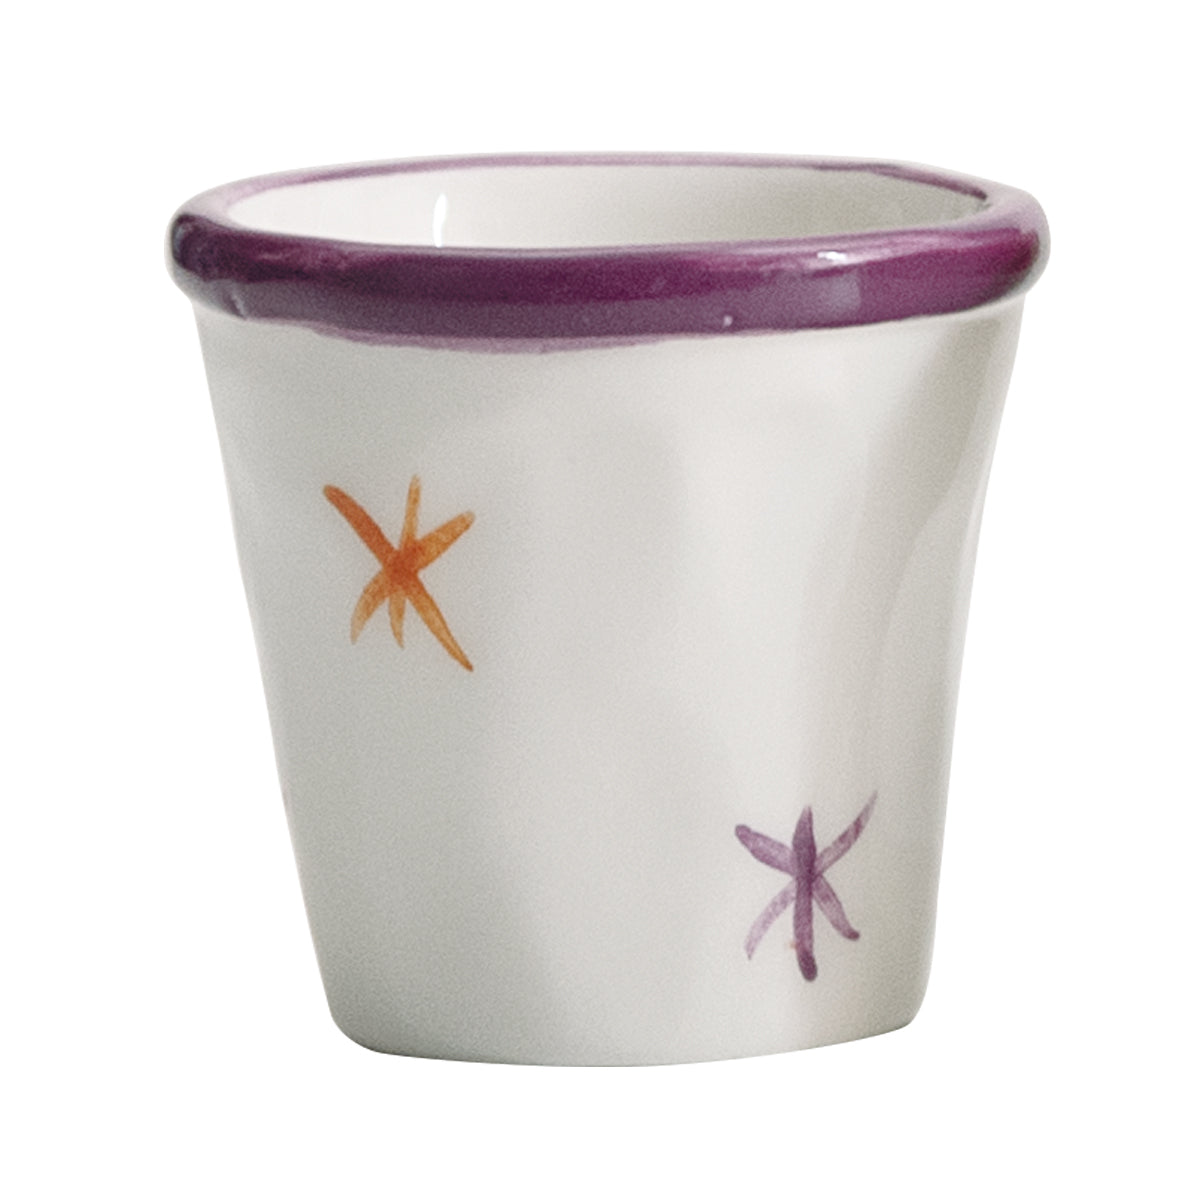 Purple Espresso Cups Set, Set of 2 Round Ceramic Espresso Cups